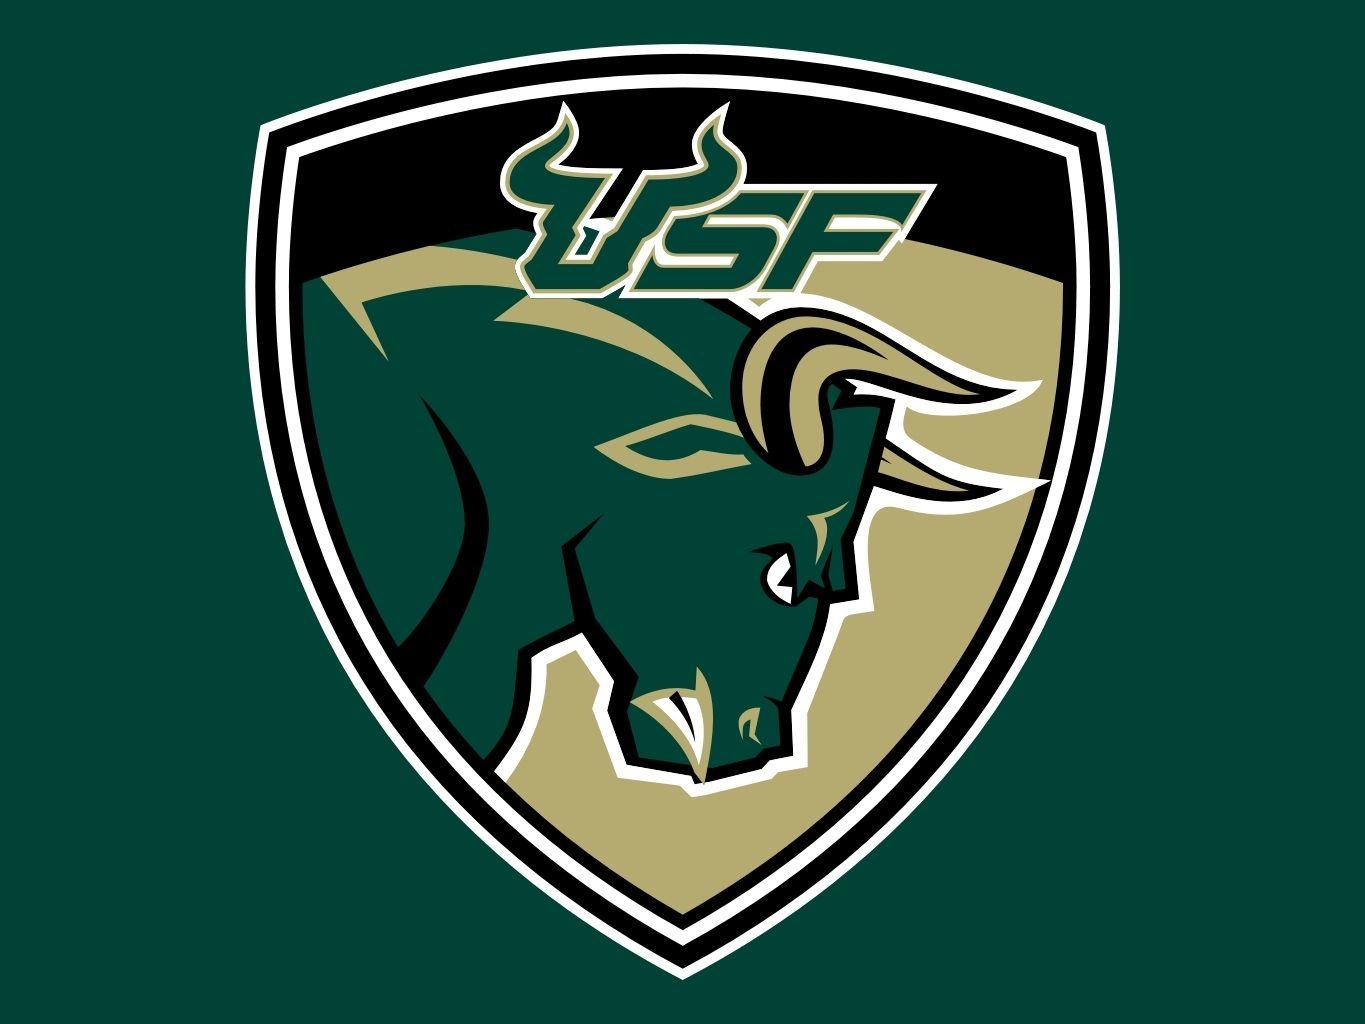 South Florida Bulls Logo - University of South Florida